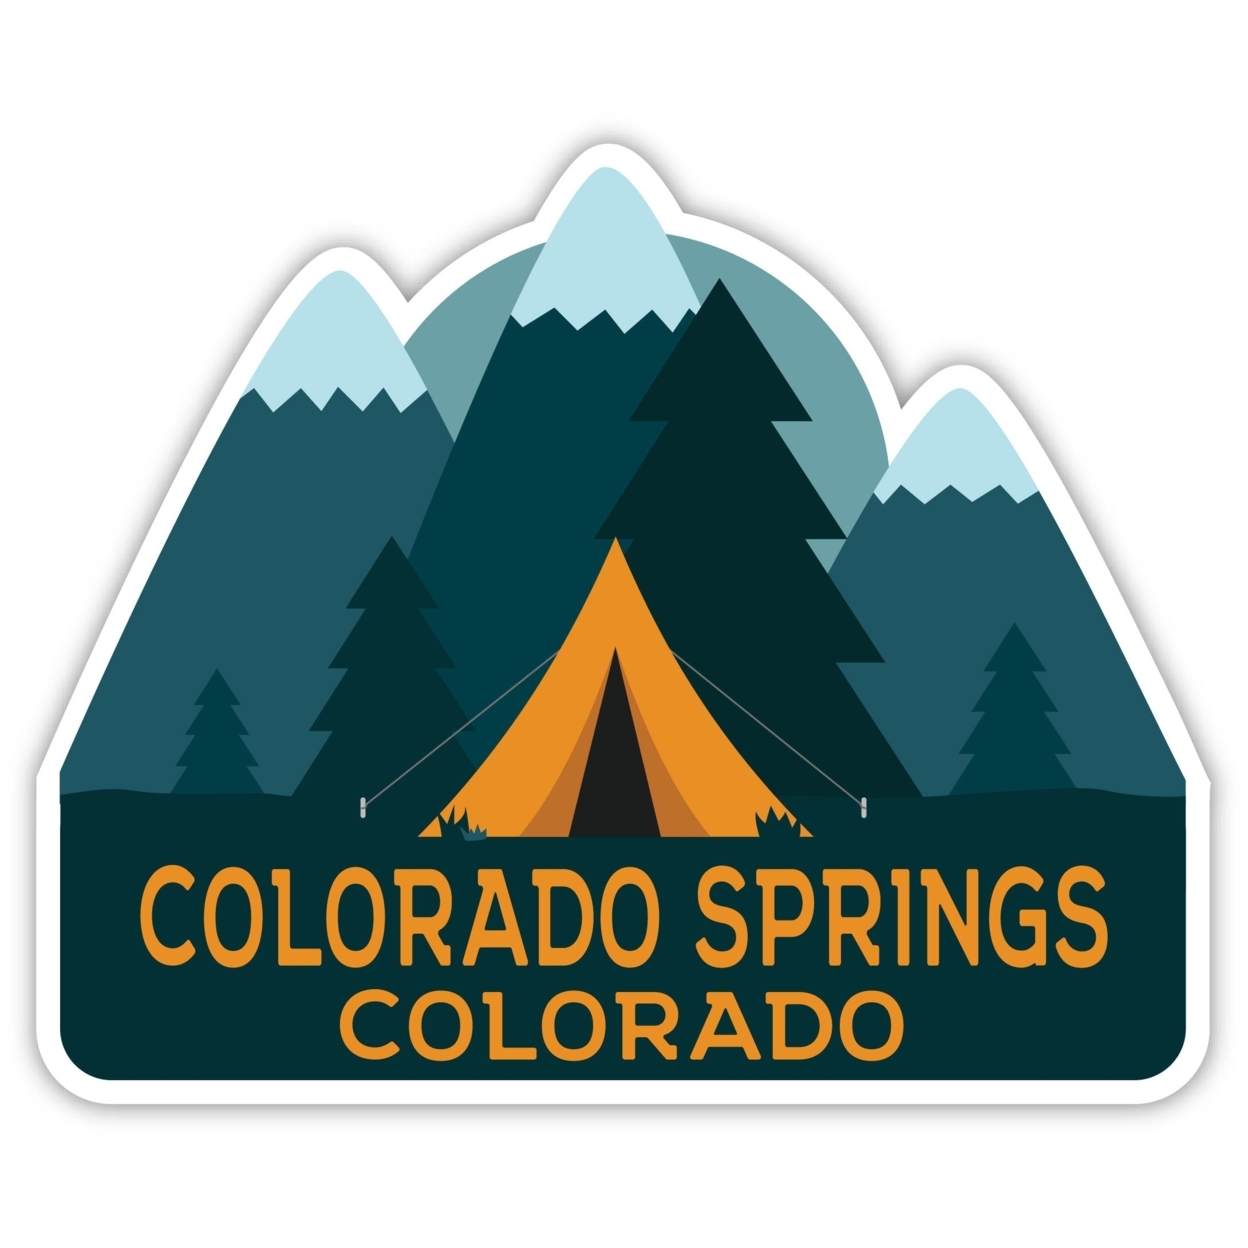 Colorado Springs Colorado Souvenir Decorative Stickers (Choose Theme And Size) - Single Unit, 4-Inch, Tent